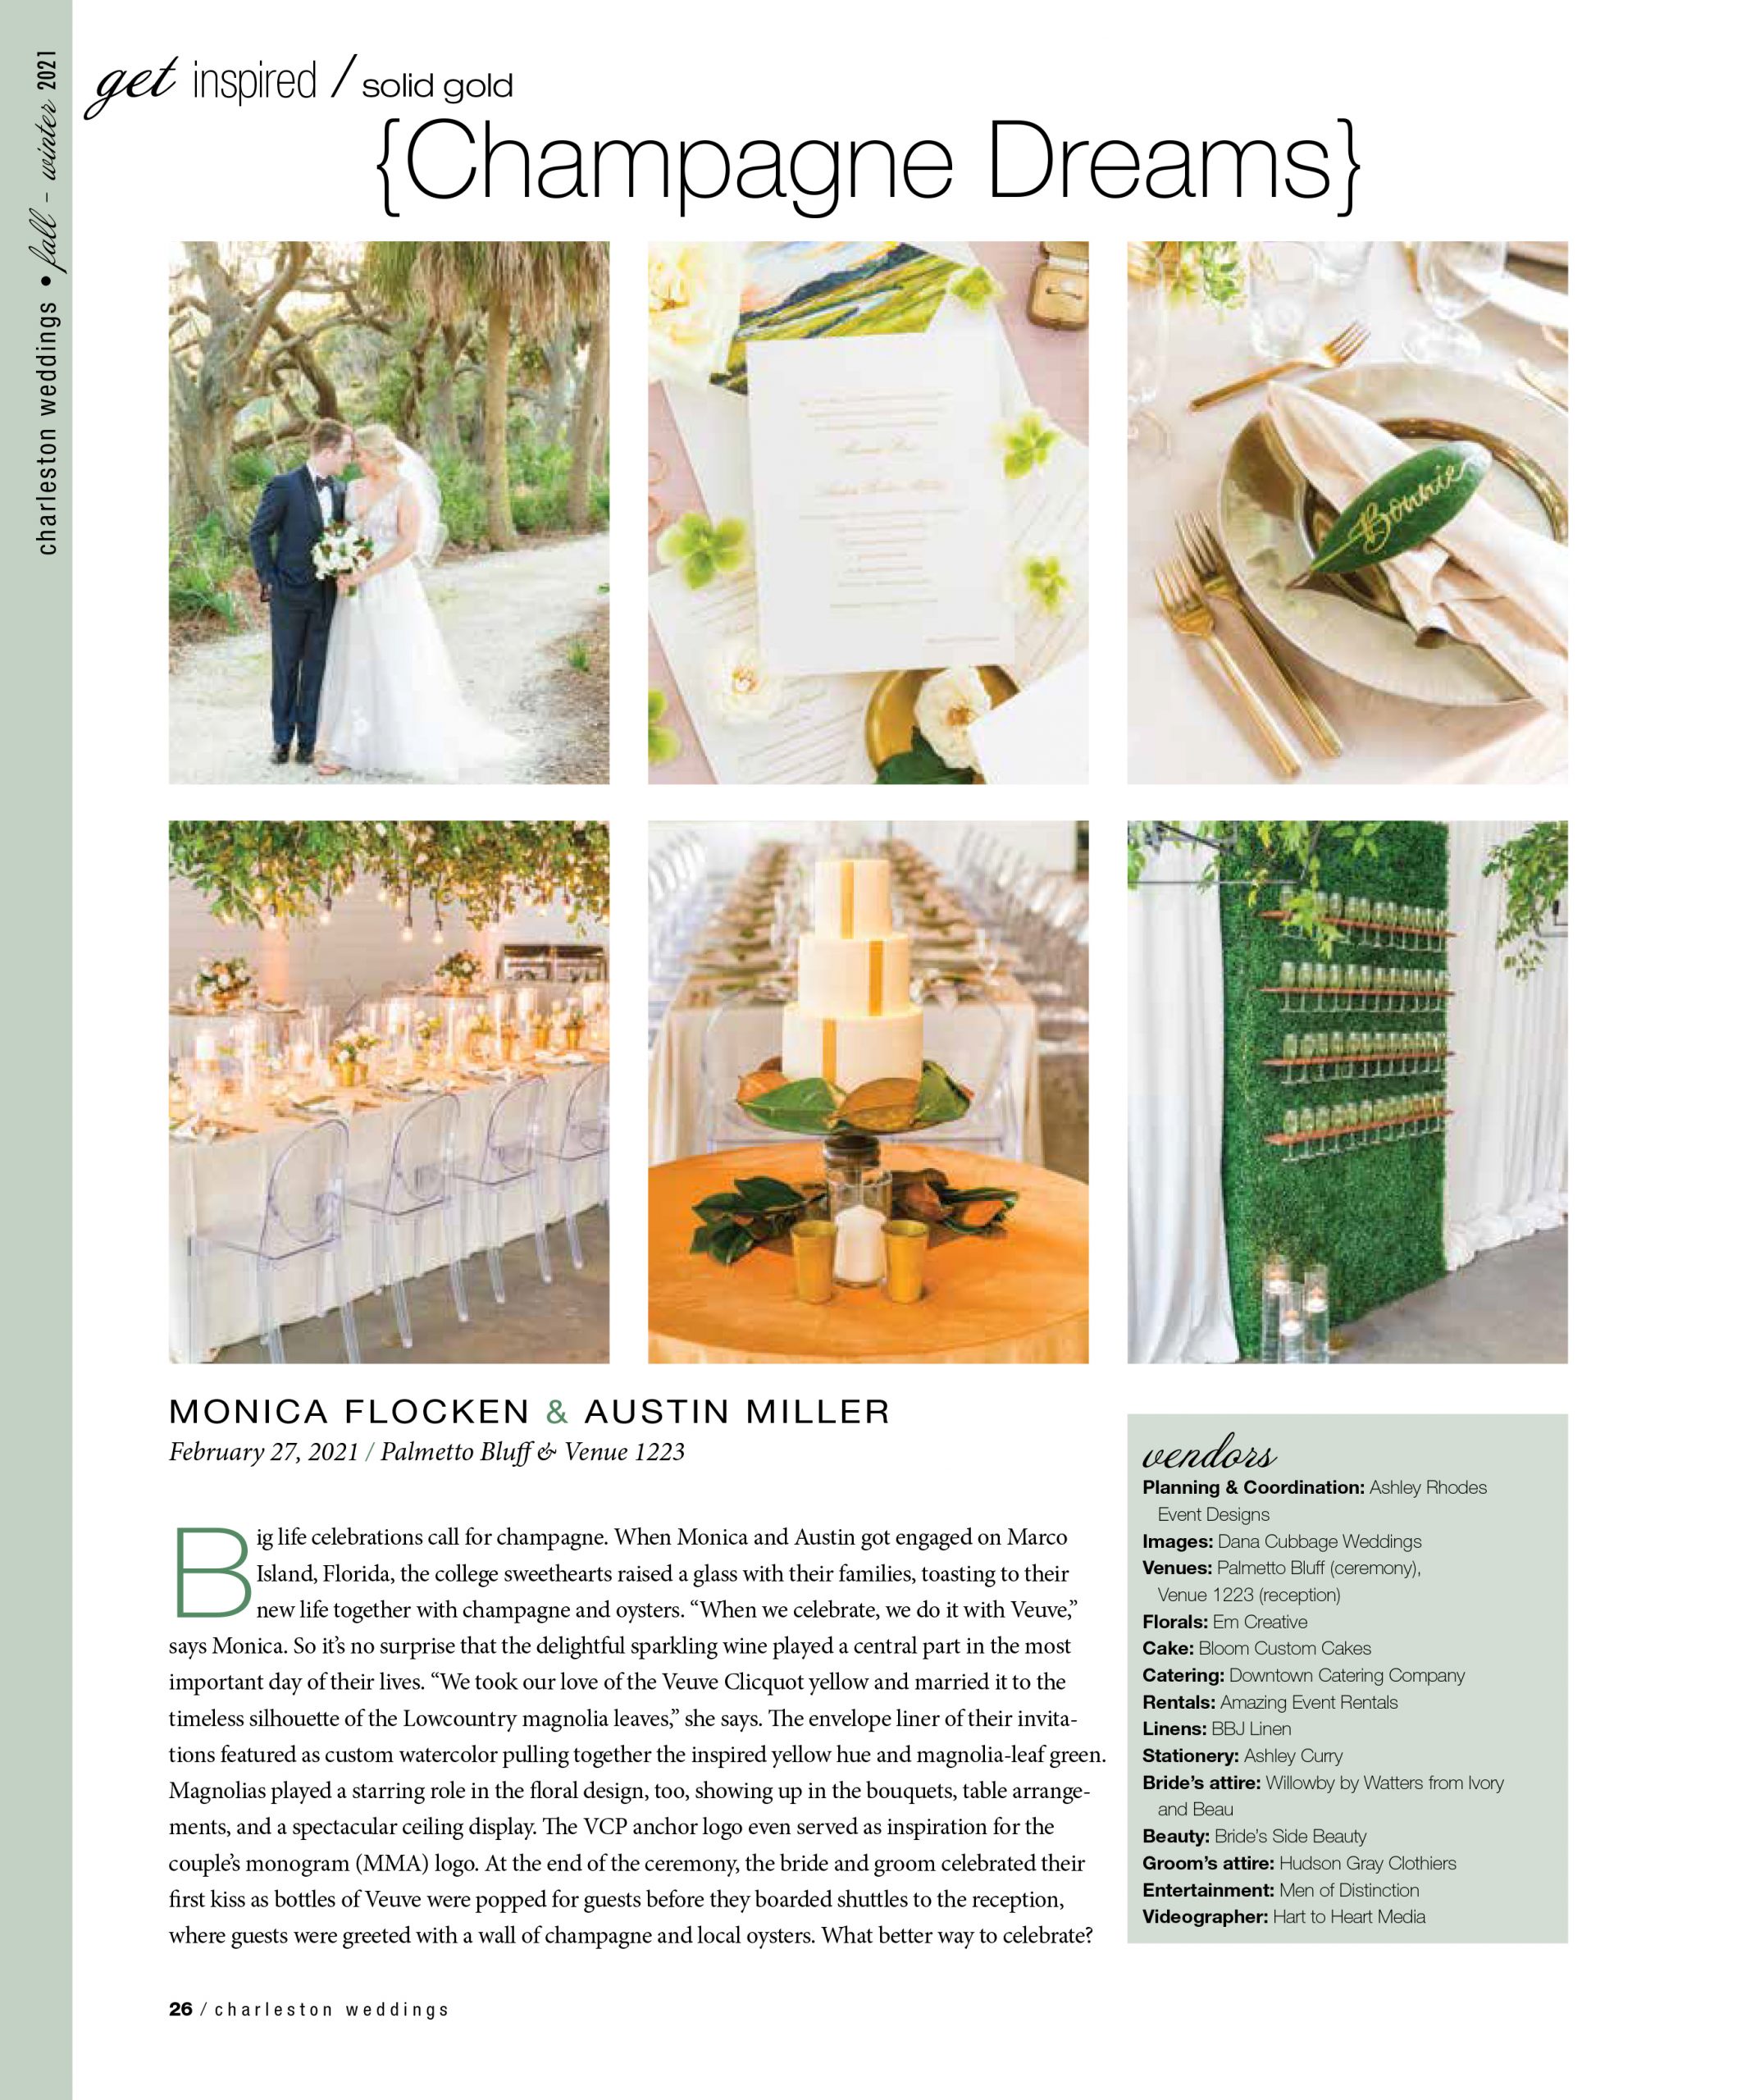 featured in charleston weddings magazine